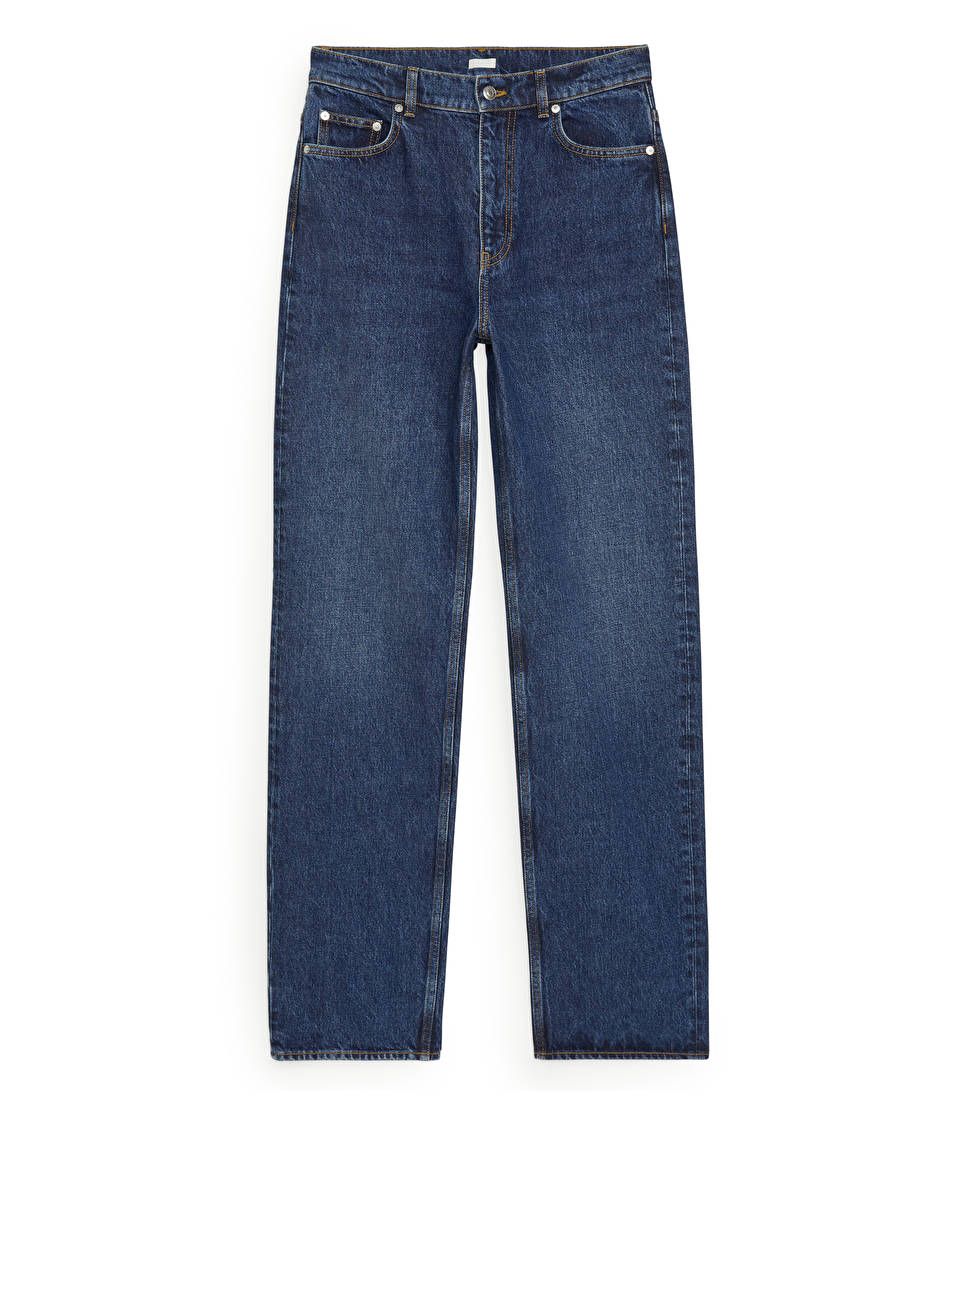 STRAIGHT Jeans | ARKET (US&UK)